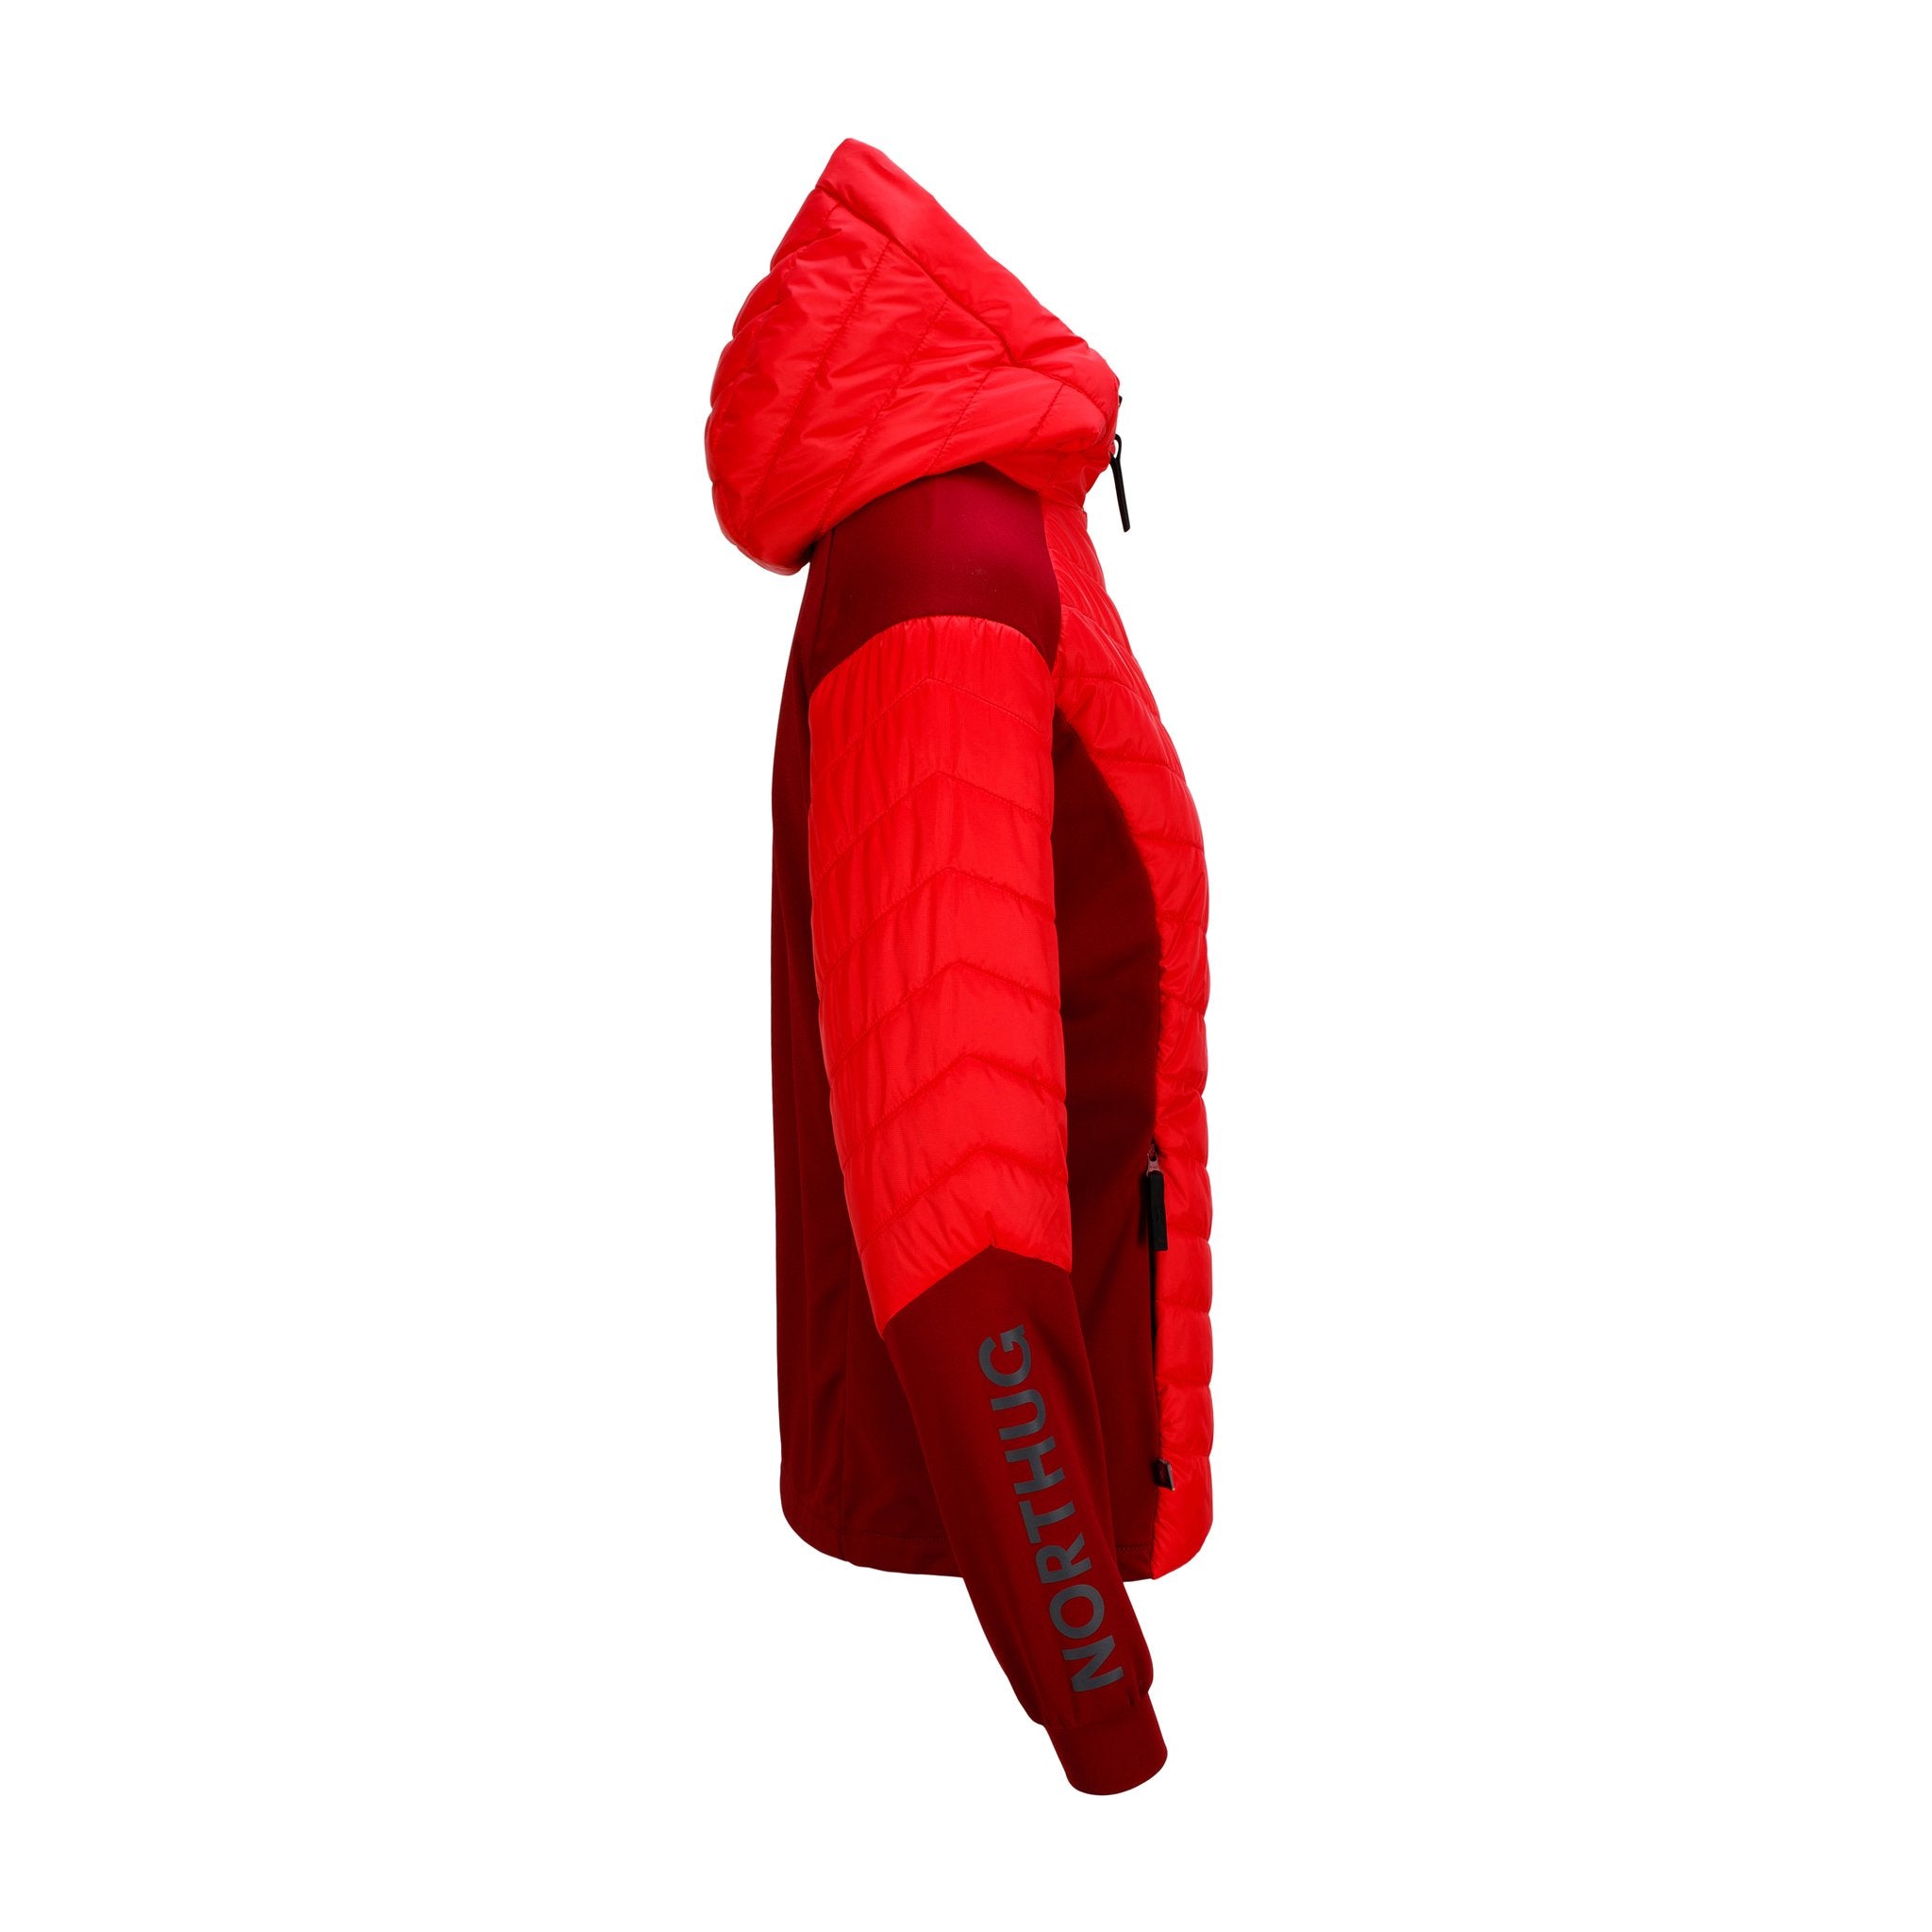 Campra Tech Hybrid Ins Wmn - Poinsetta Red